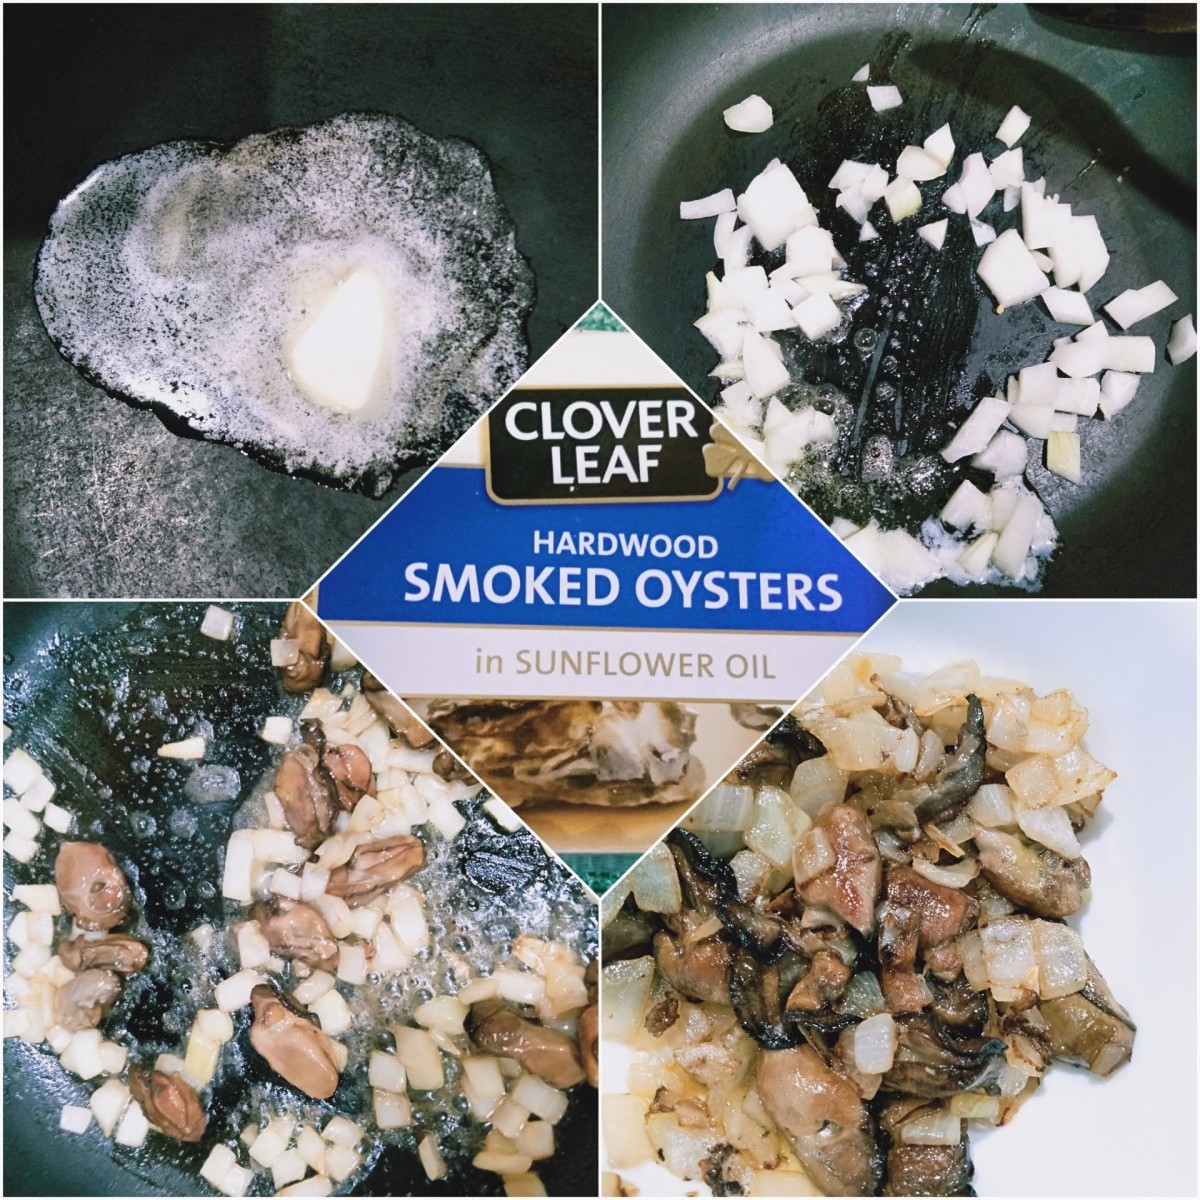 Stir-fried smoked oysters